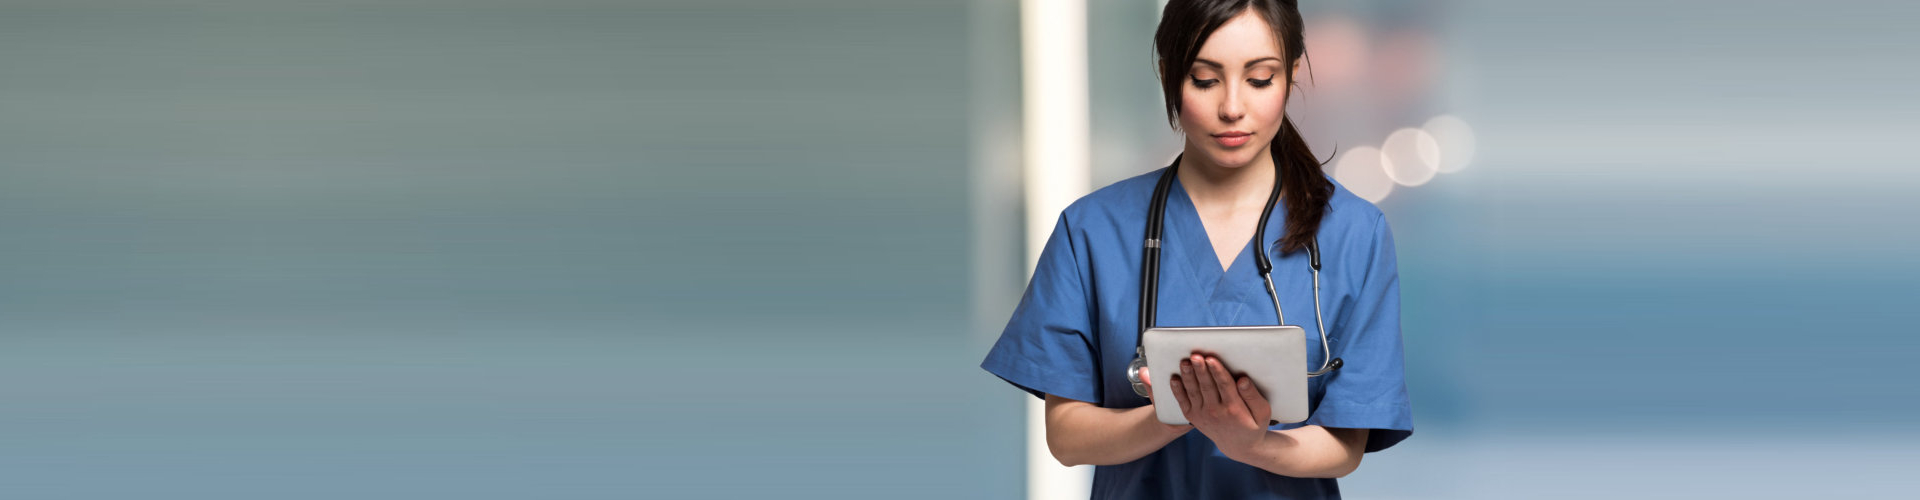 nurse browsing on her tablet